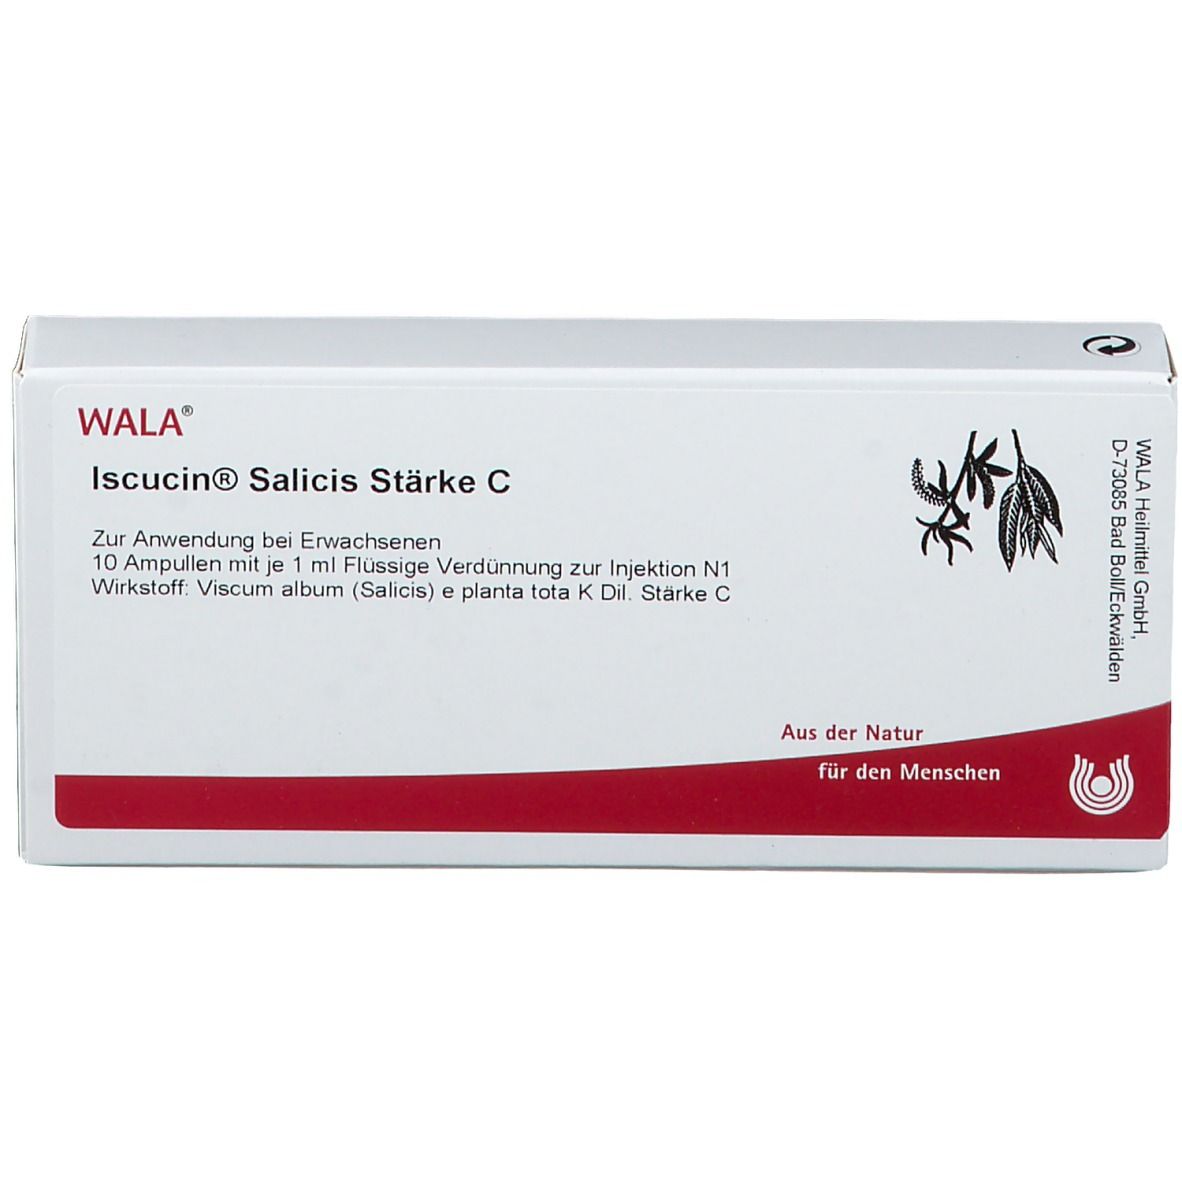 WALA® Iscucin® Salicis Stärke C